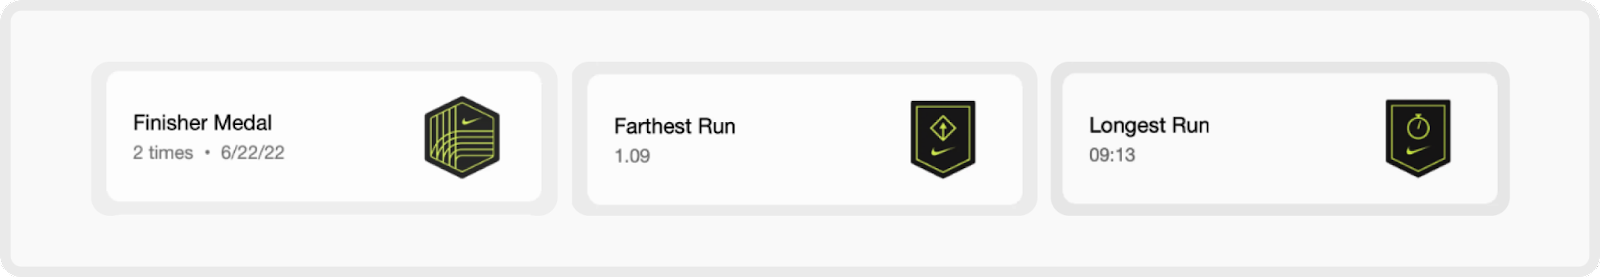 Screenshot from the Nike Run Club app